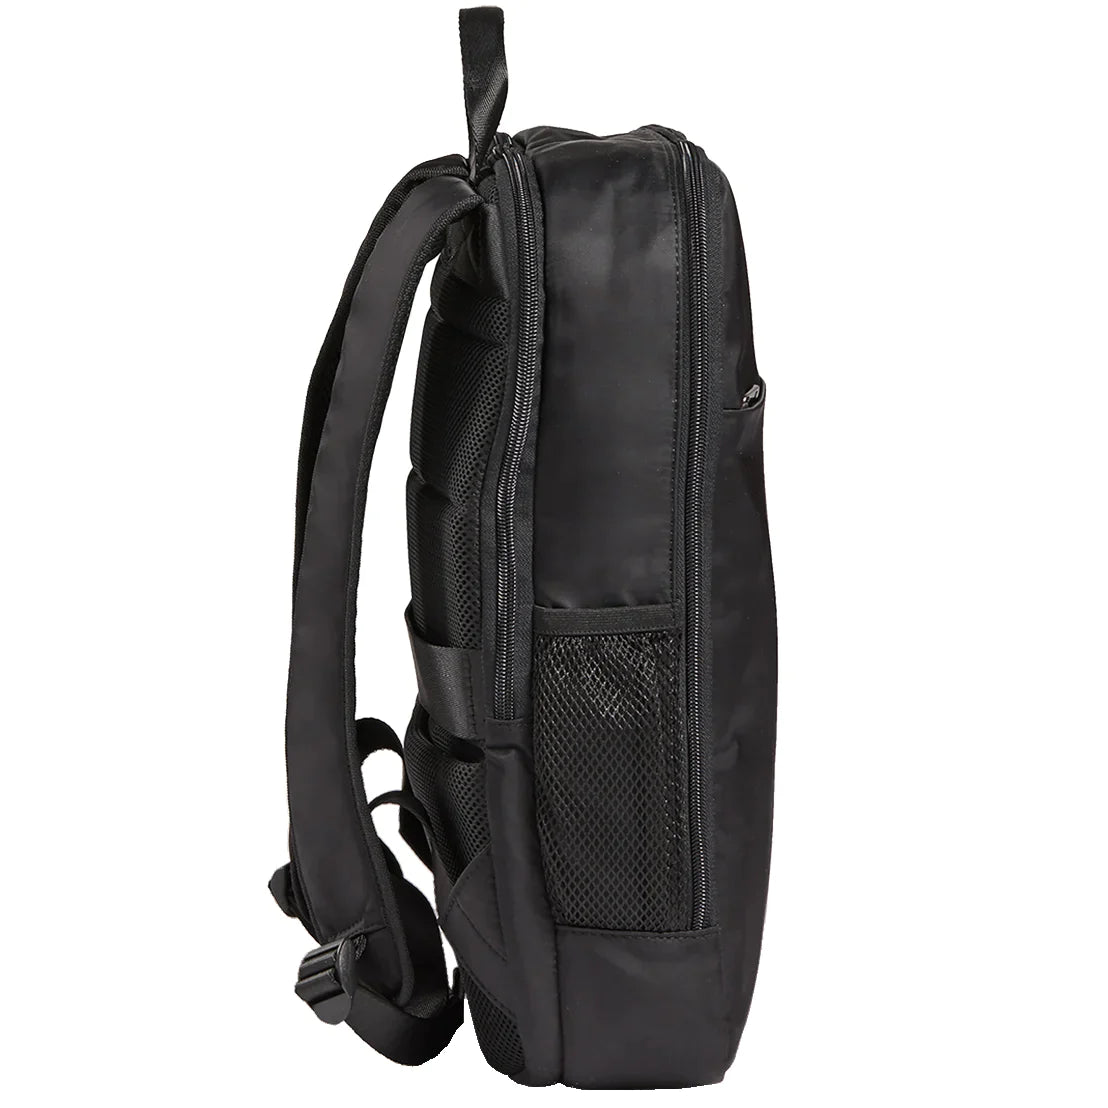 Stratic Pure Backpack 40 cm - Black